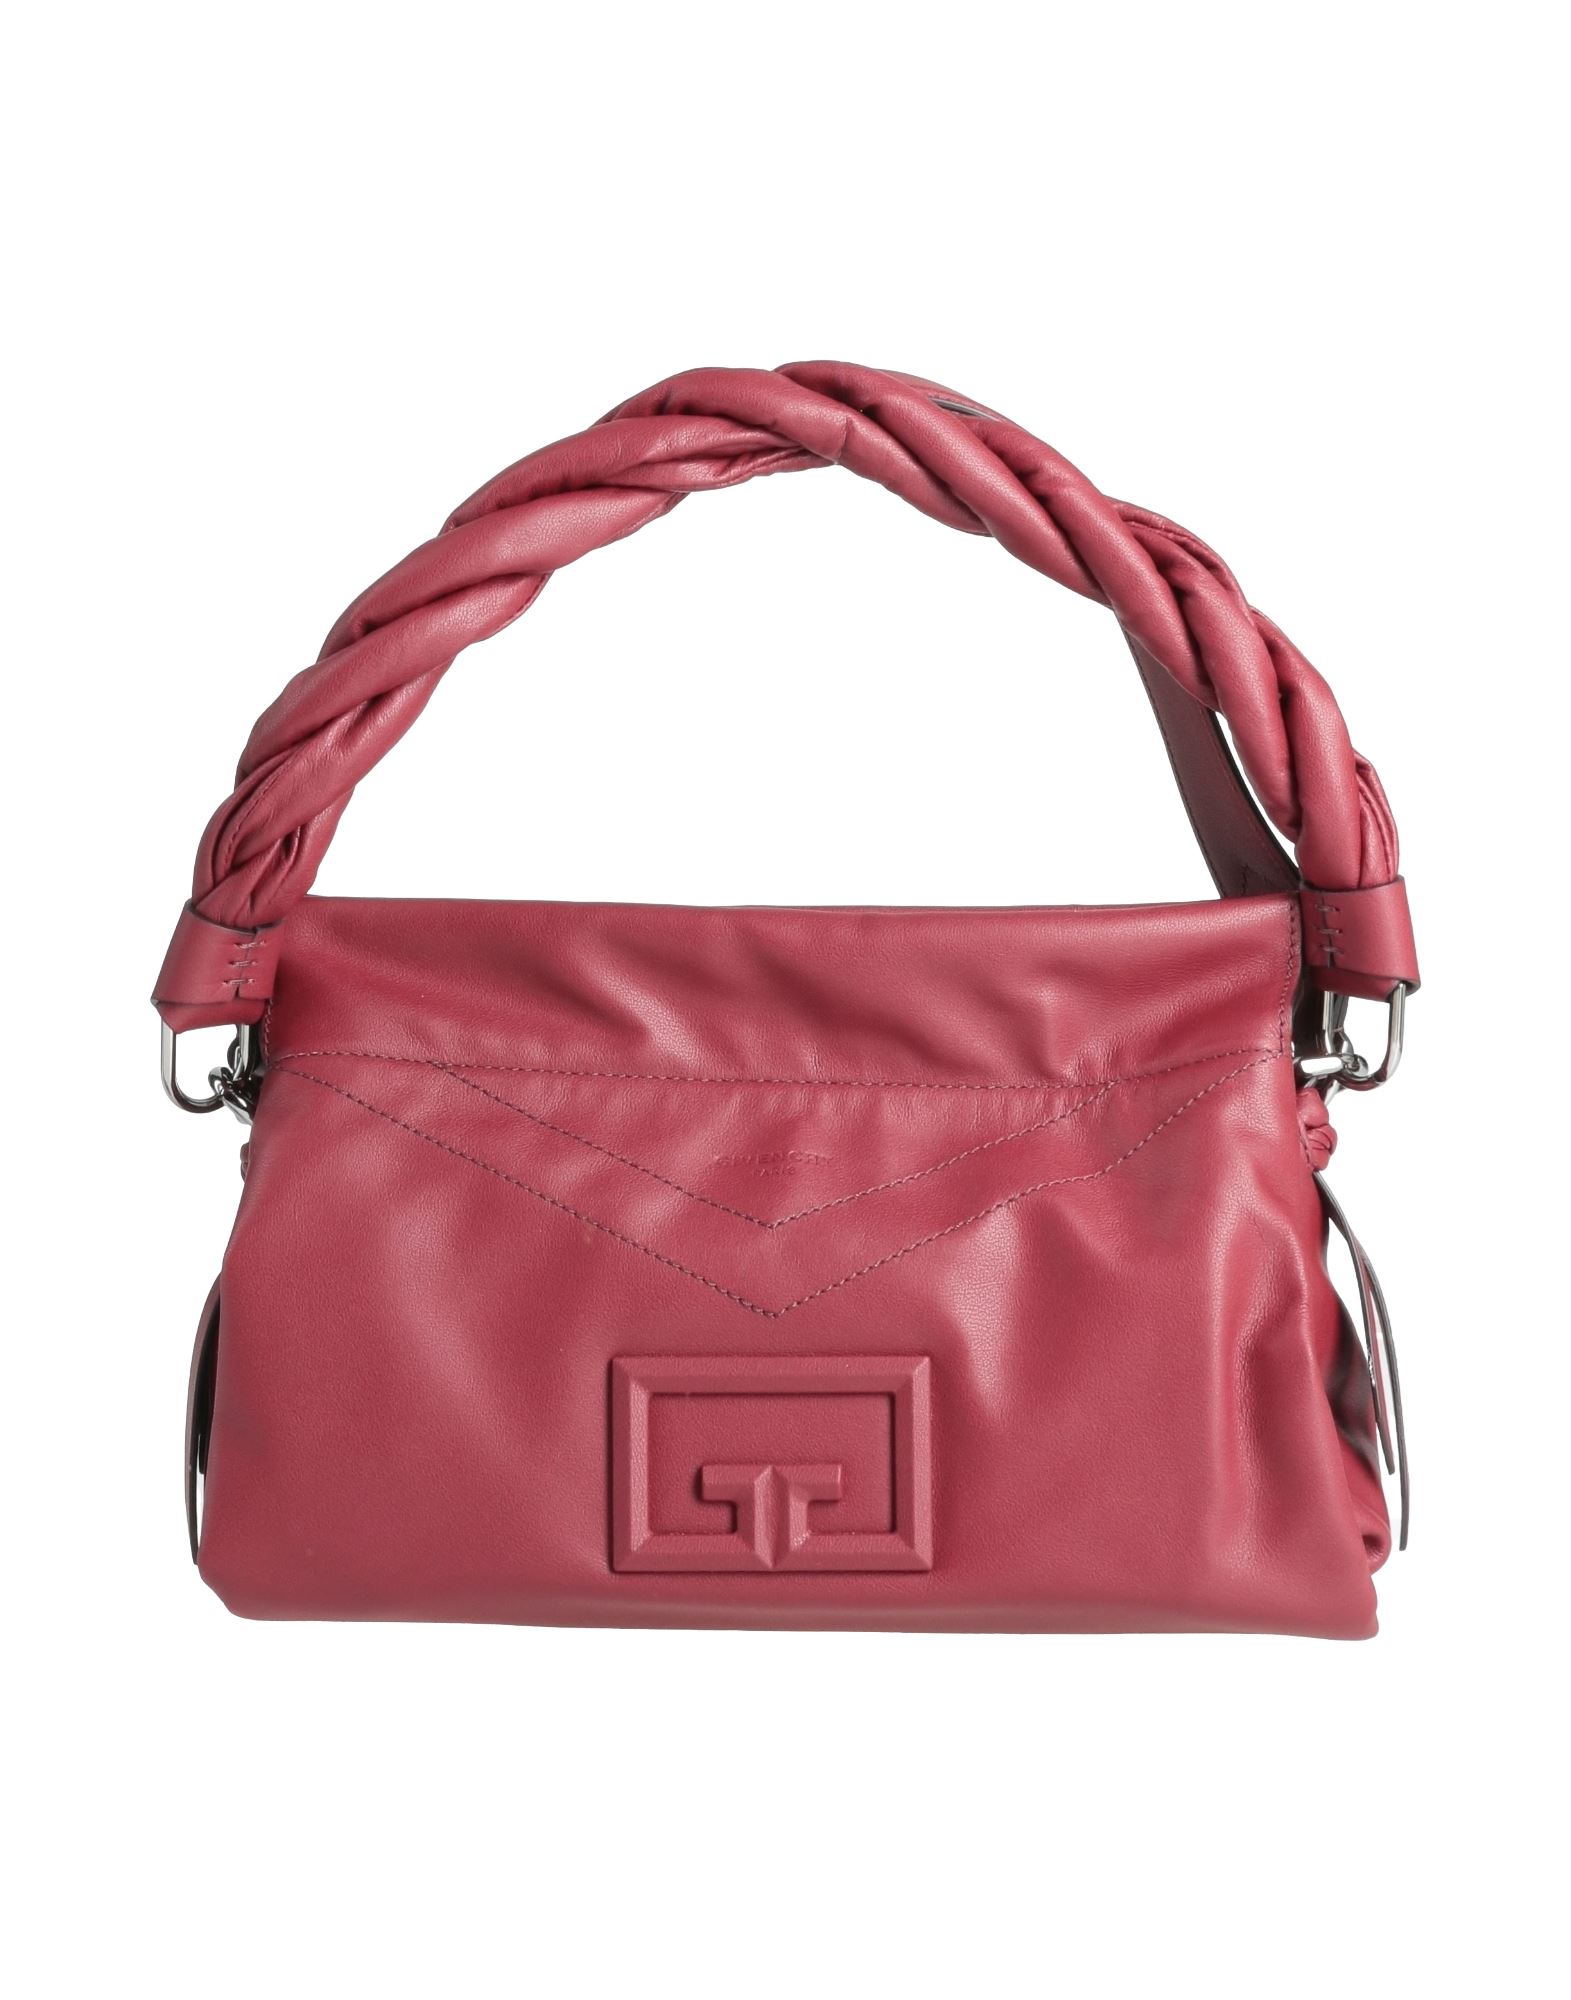 Givenchy Handbags In Maroon